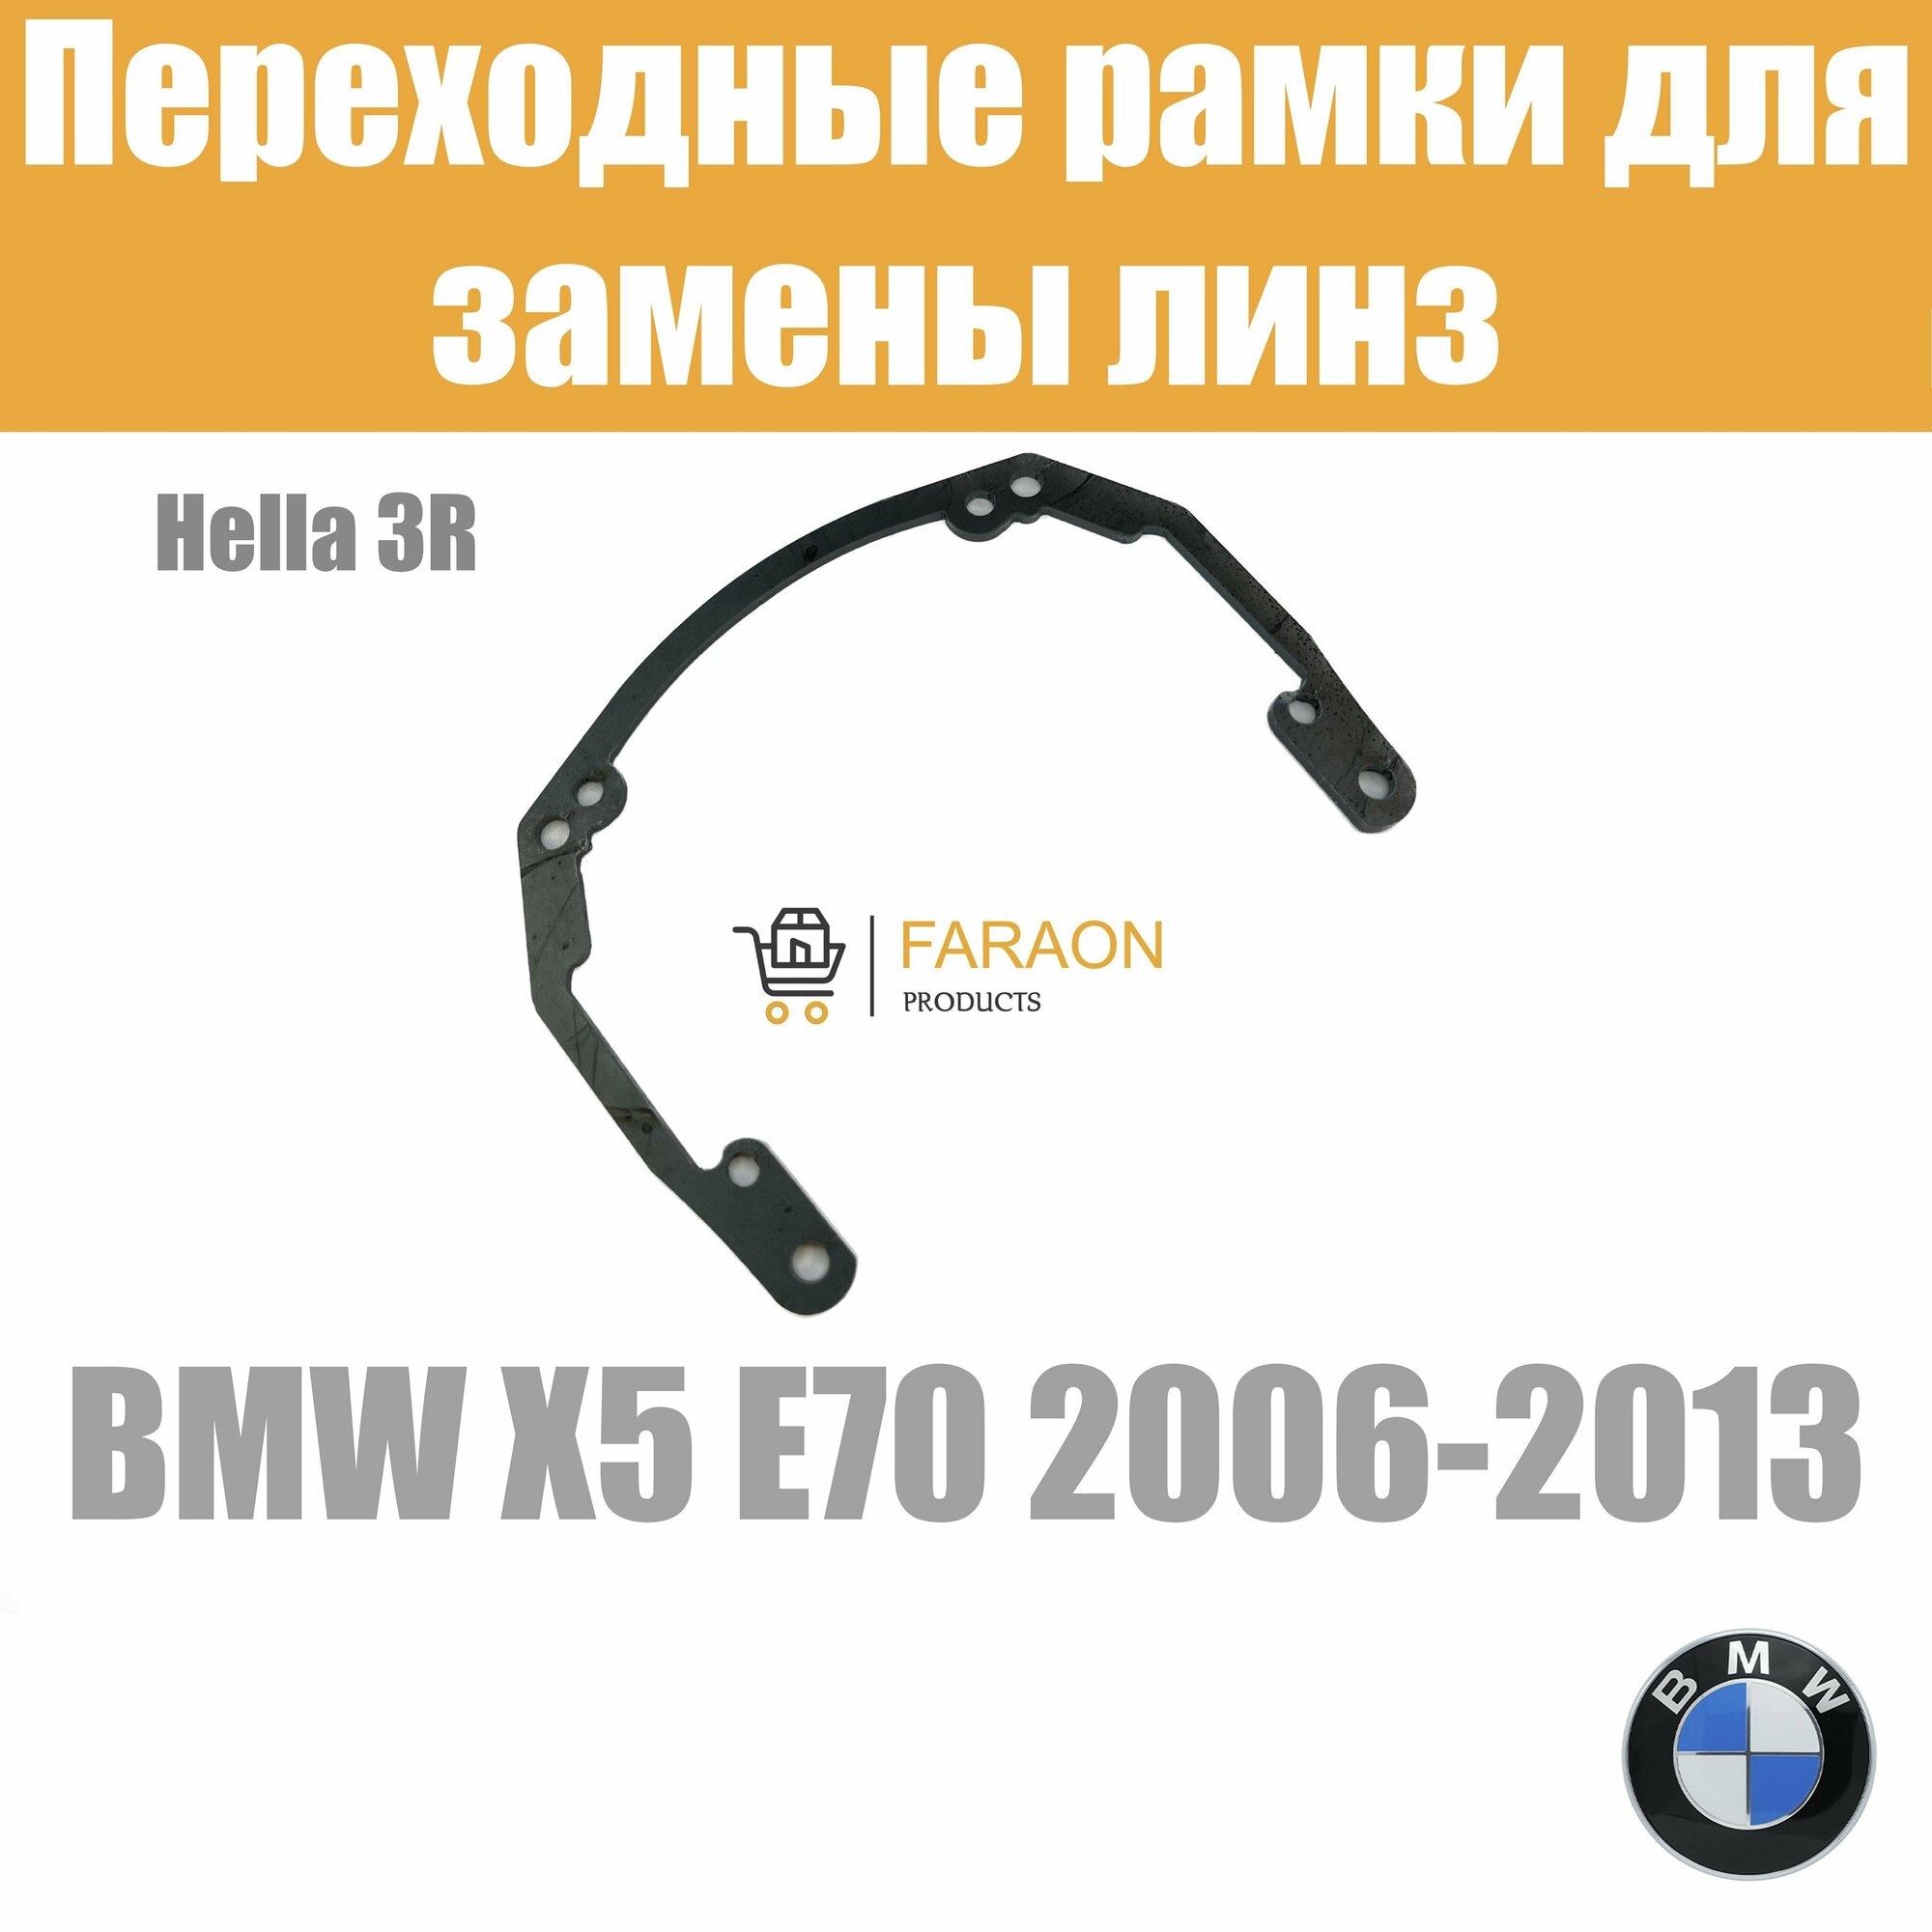 Переходные рамки для линз на BMW X5 E70 (2006-2013) под модуль Hella 3R/Hella 3 (Комплект, 2шт)